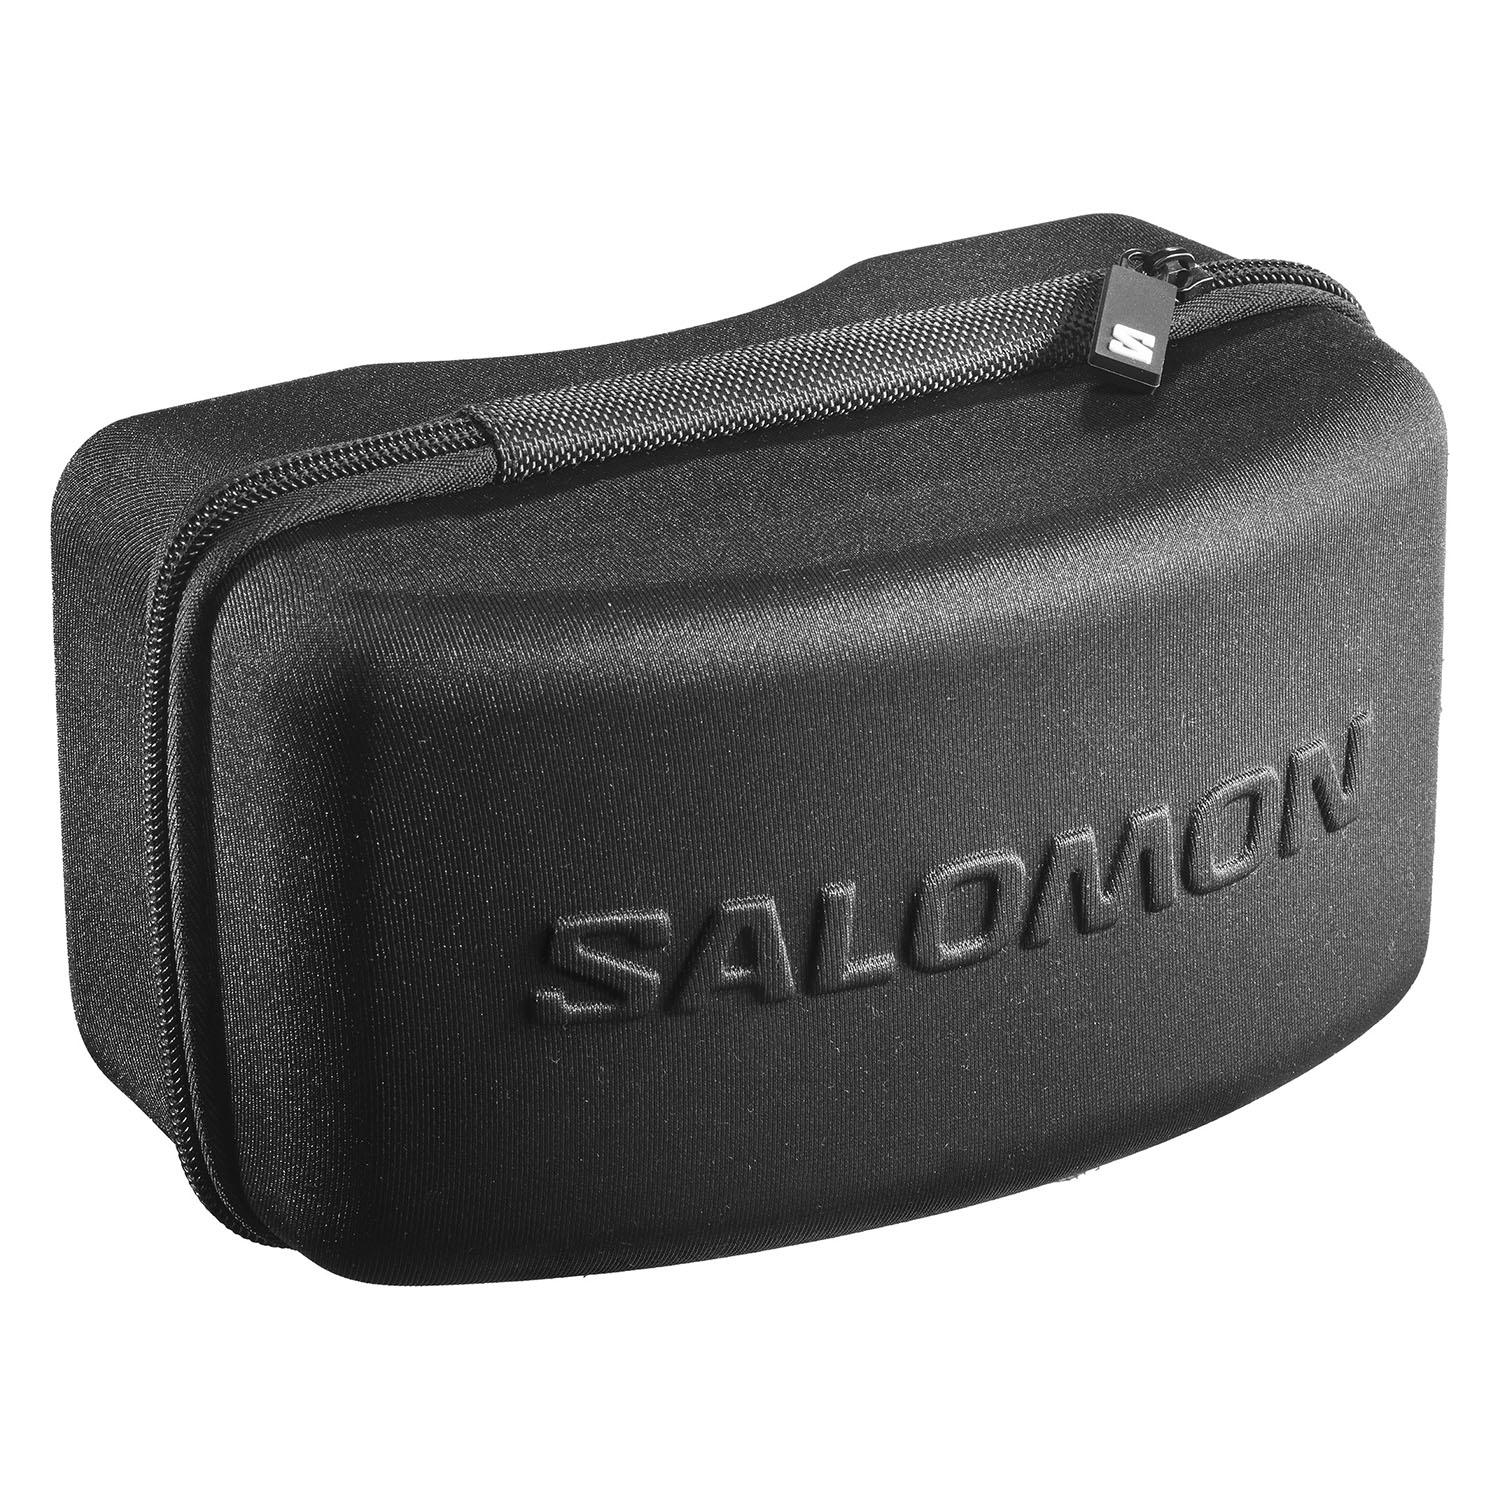 Очки горнолыжные SALOMON Sentry Pro Sigma White